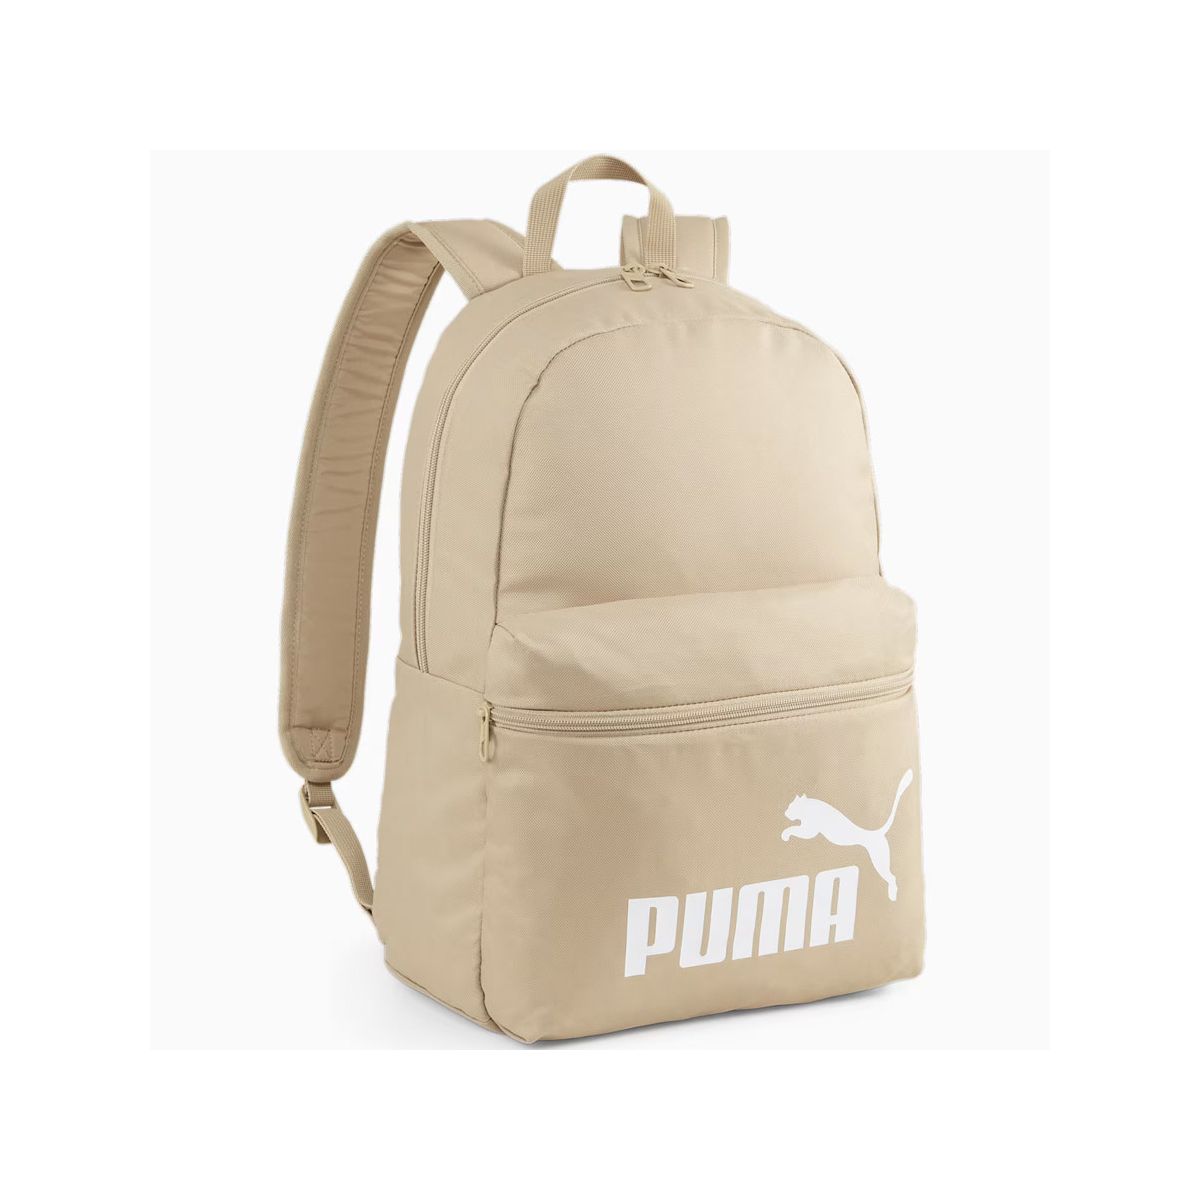 Plecak Puma PUMA PHASE BACKPACK beżowy (079943-16)